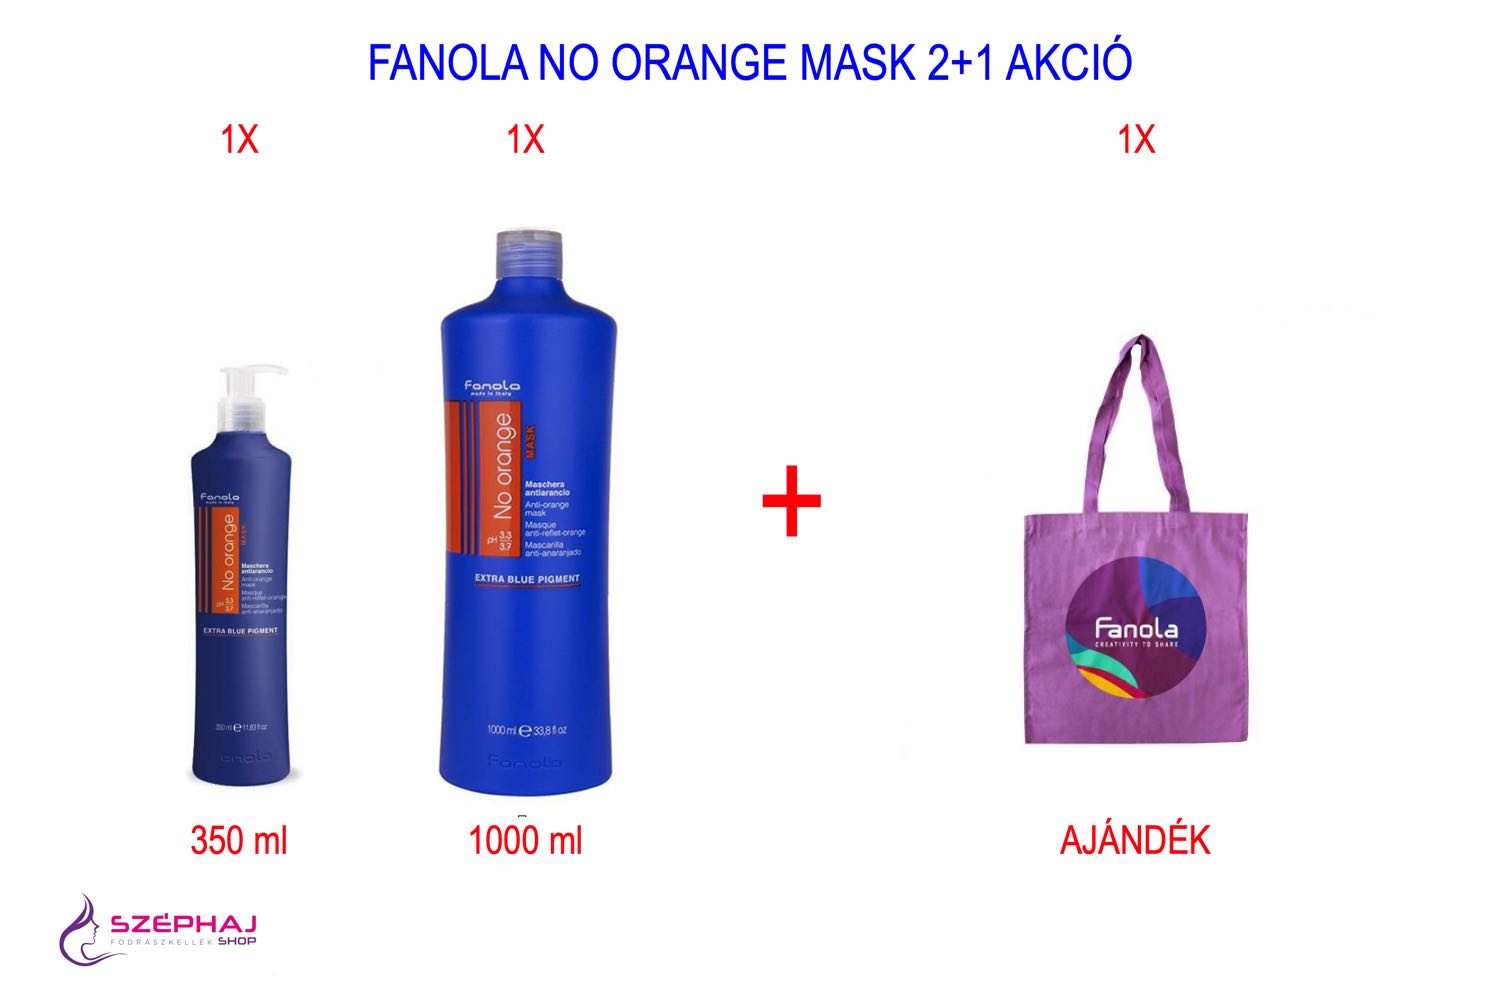 FANOLA No Orange Mask 350 ml & 1000 ml 2+1 AKCIÓ